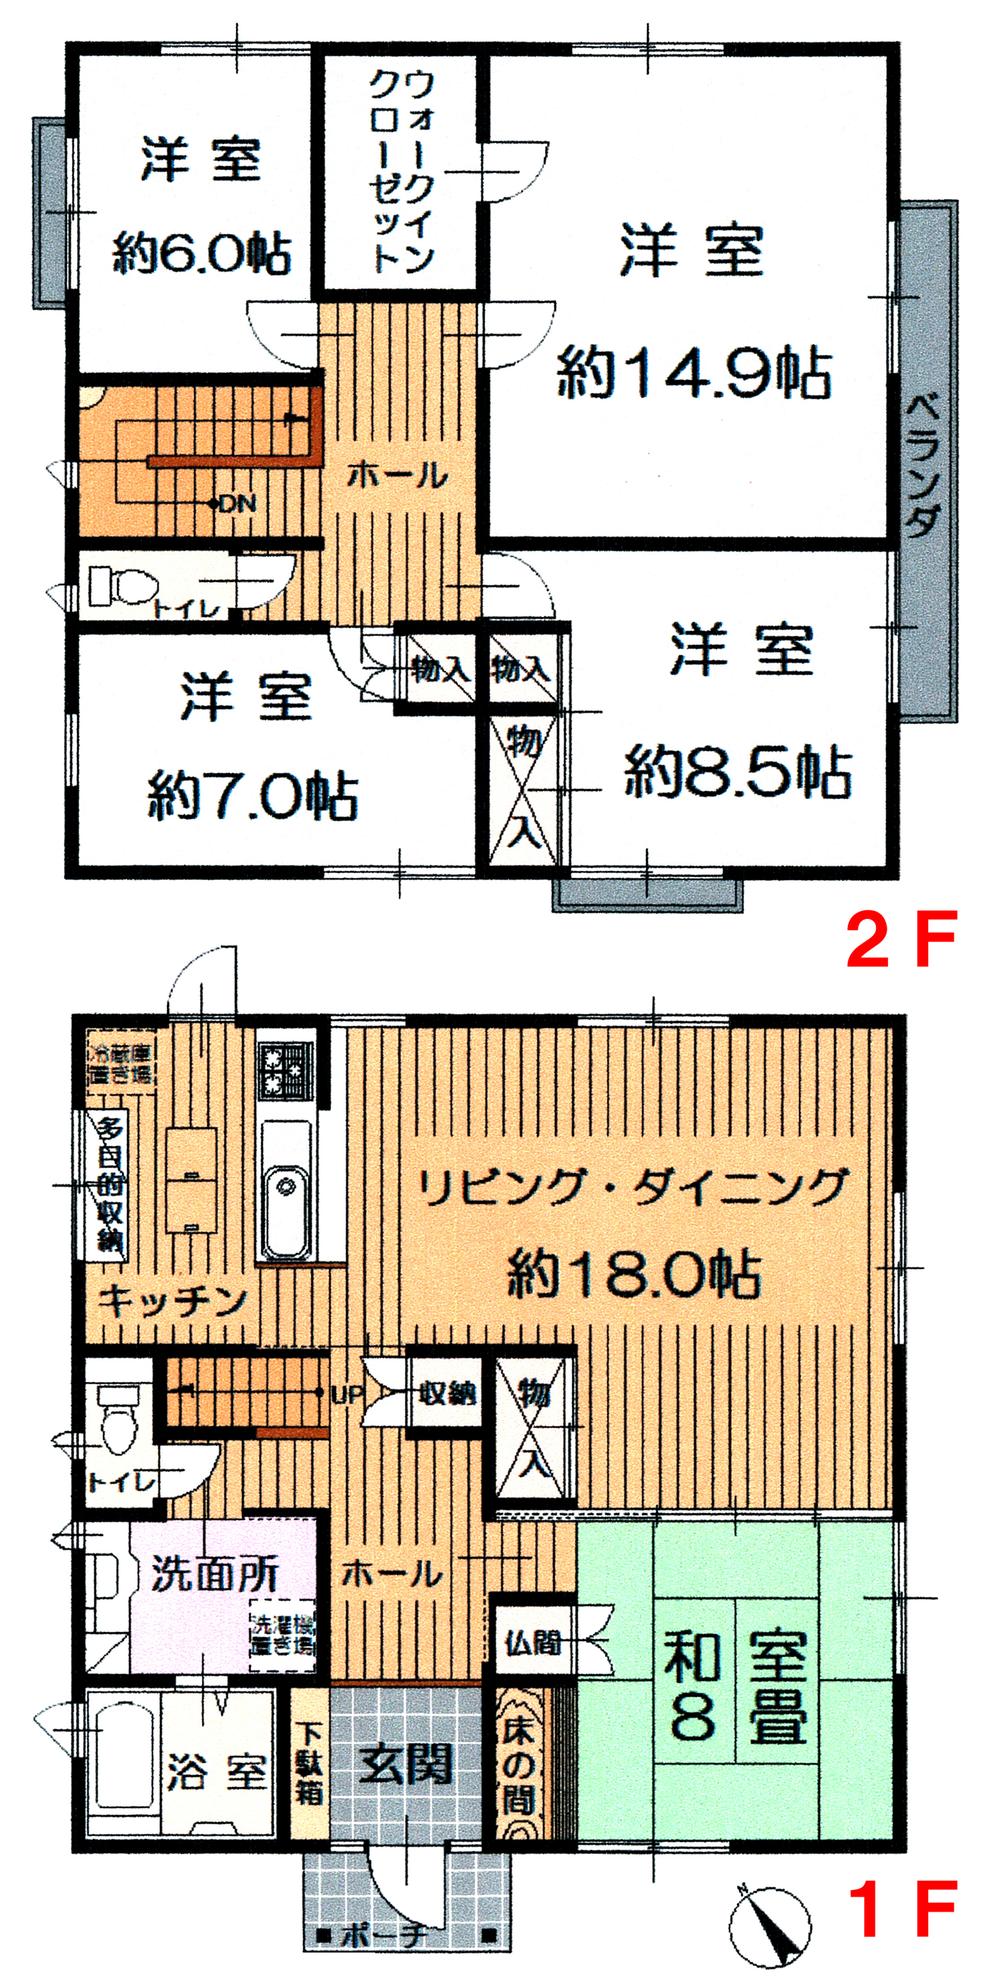 Floor plan. 21 million yen, 5LDK, Land area 528.37 sq m , Building area 165.62 sq m spacious 5LDK! The master bedroom of about 14.9 quires is, Plenty of storage walk-in closet!